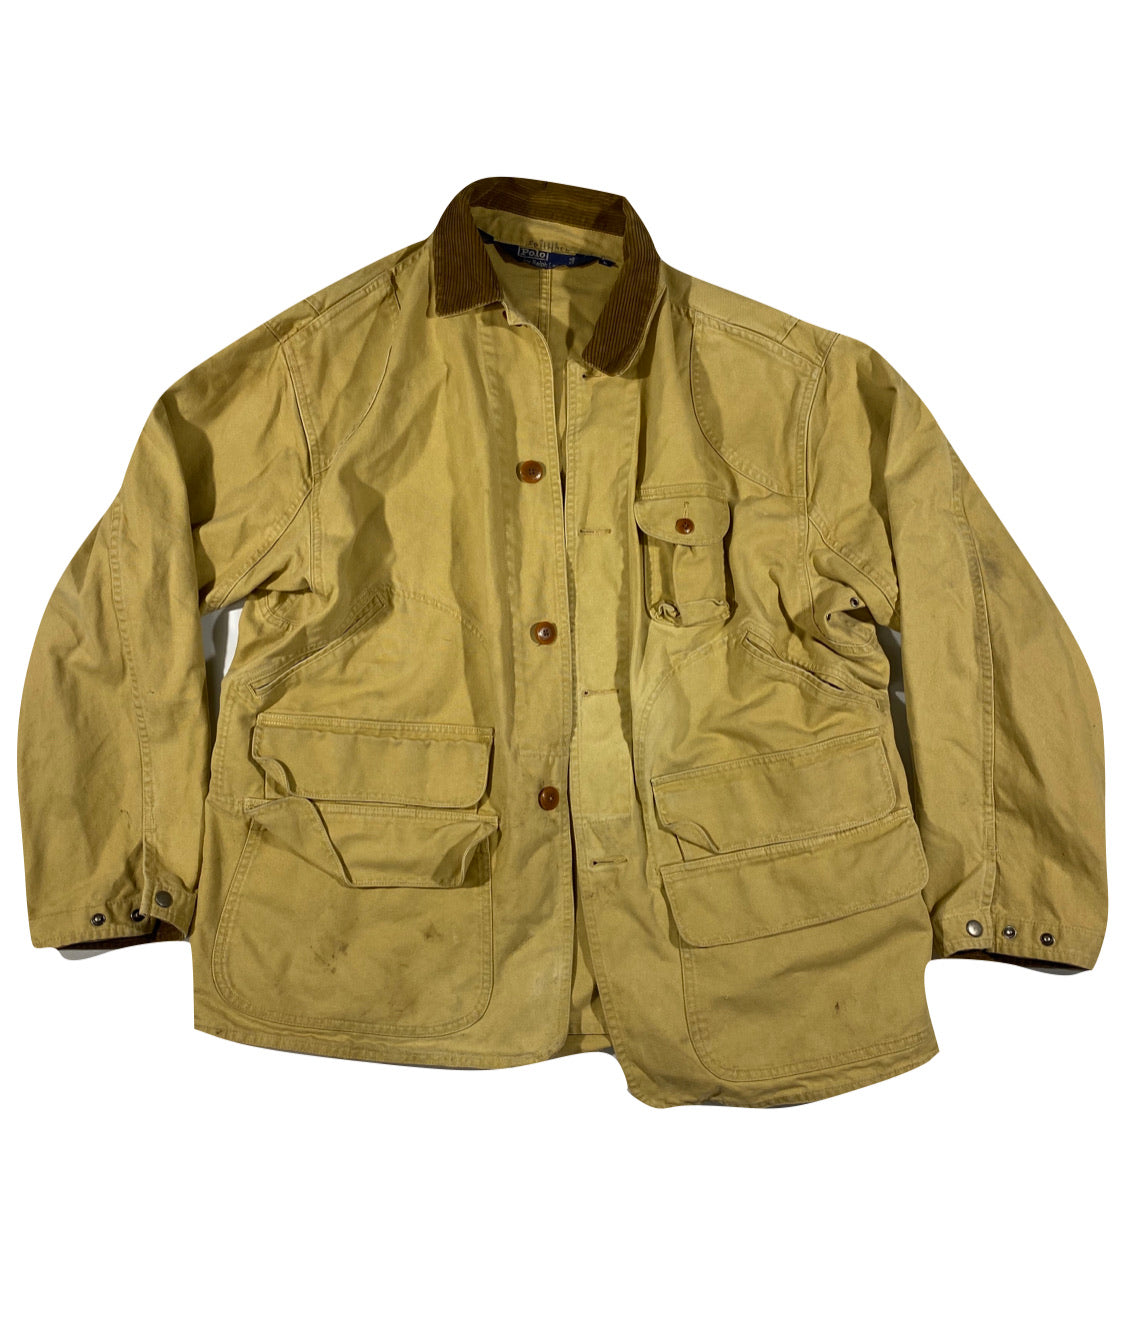 Polo ralph lauren hunting jacket chore coat large – Vintage Sponsor